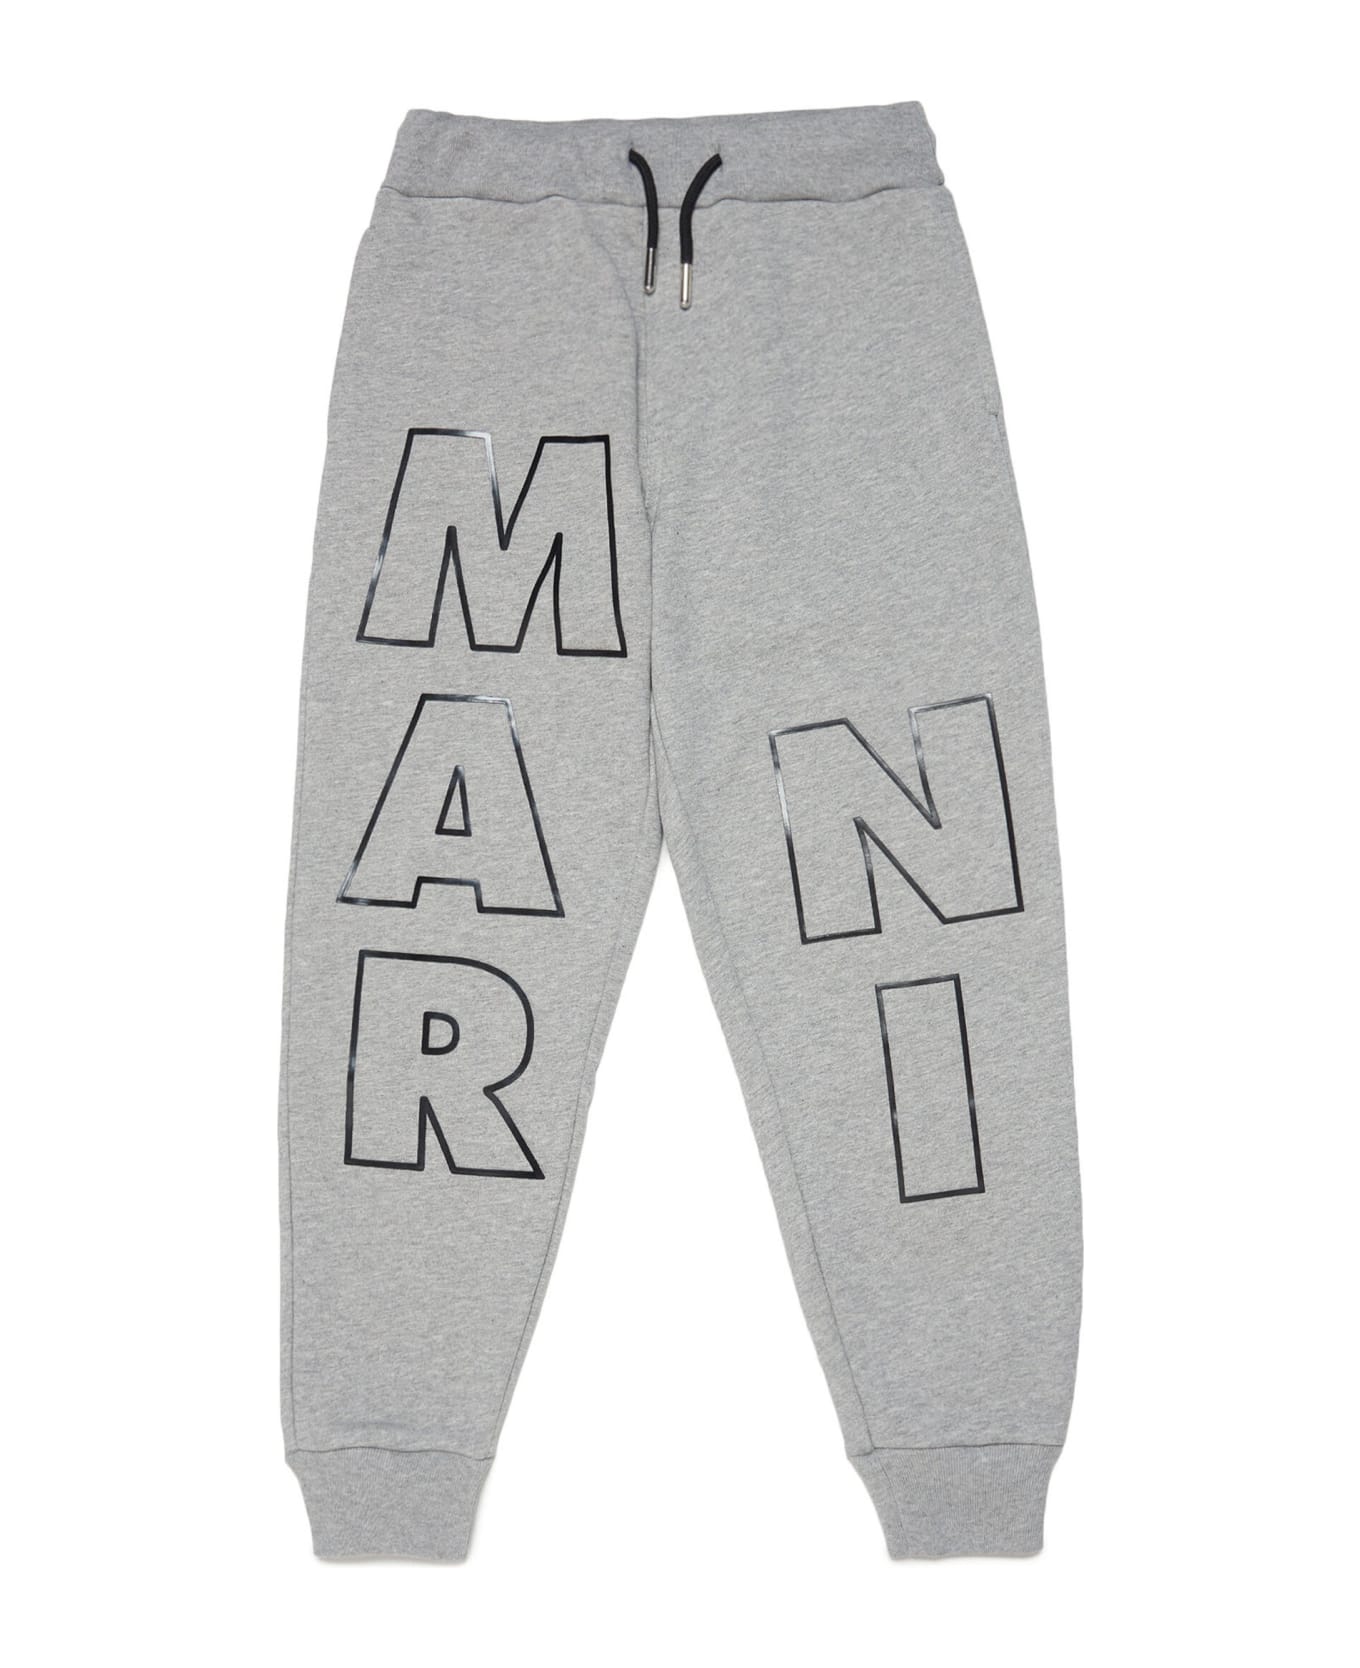 Marni Mp37u Trousers Marni Grey Fleece Trousers With Displaced Marni Logo - Inox raven melange